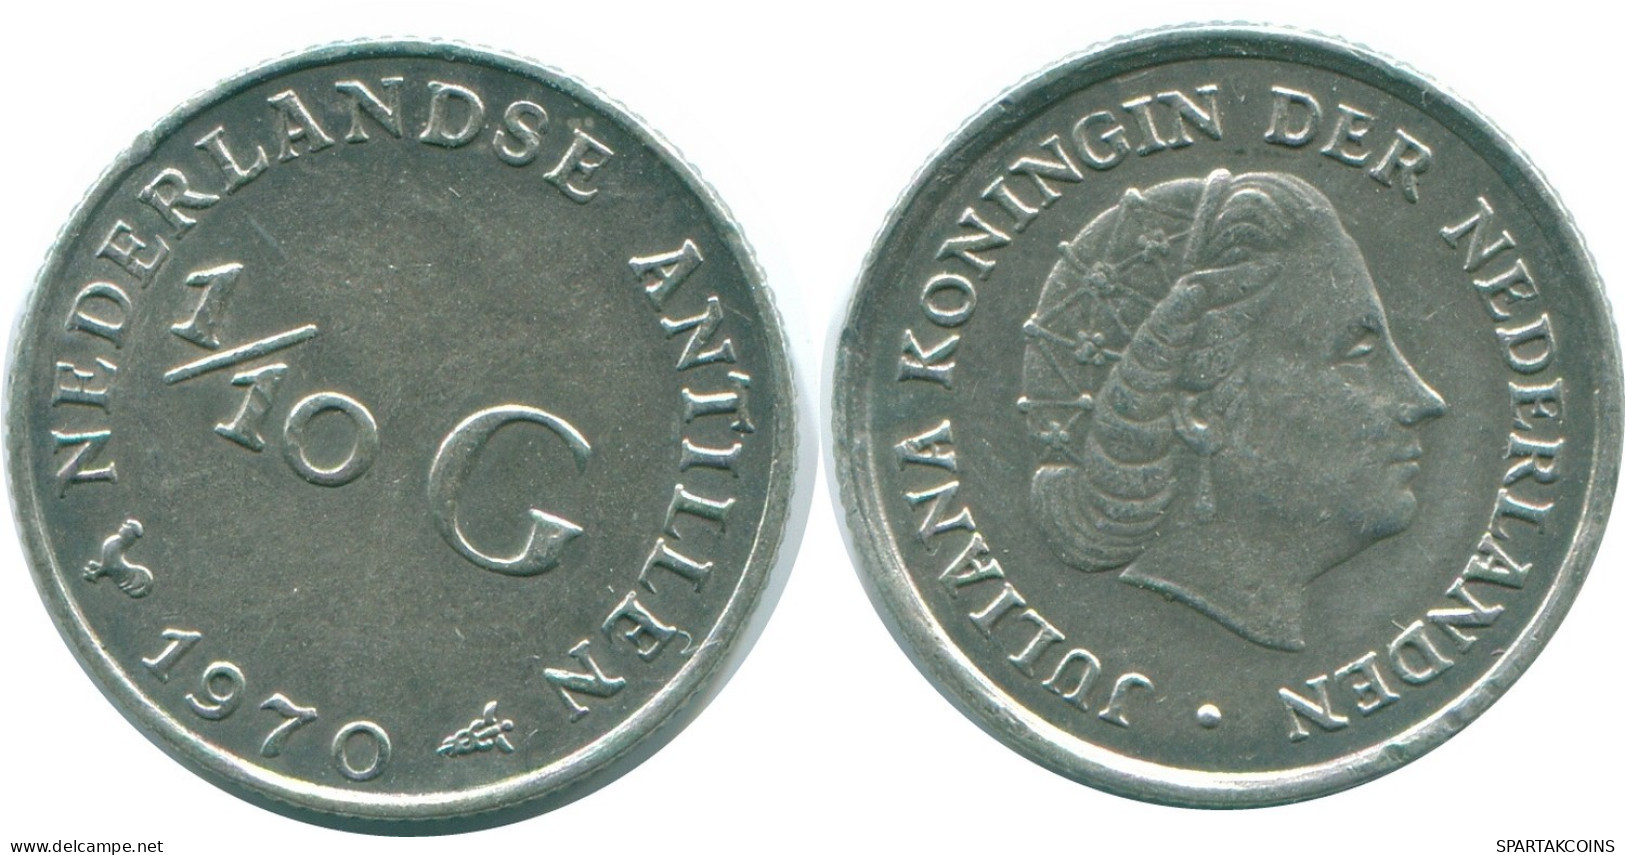 1/10 GULDEN 1970 NETHERLANDS ANTILLES SILVER Colonial Coin #NL12981.3.U.A - Antille Olandesi